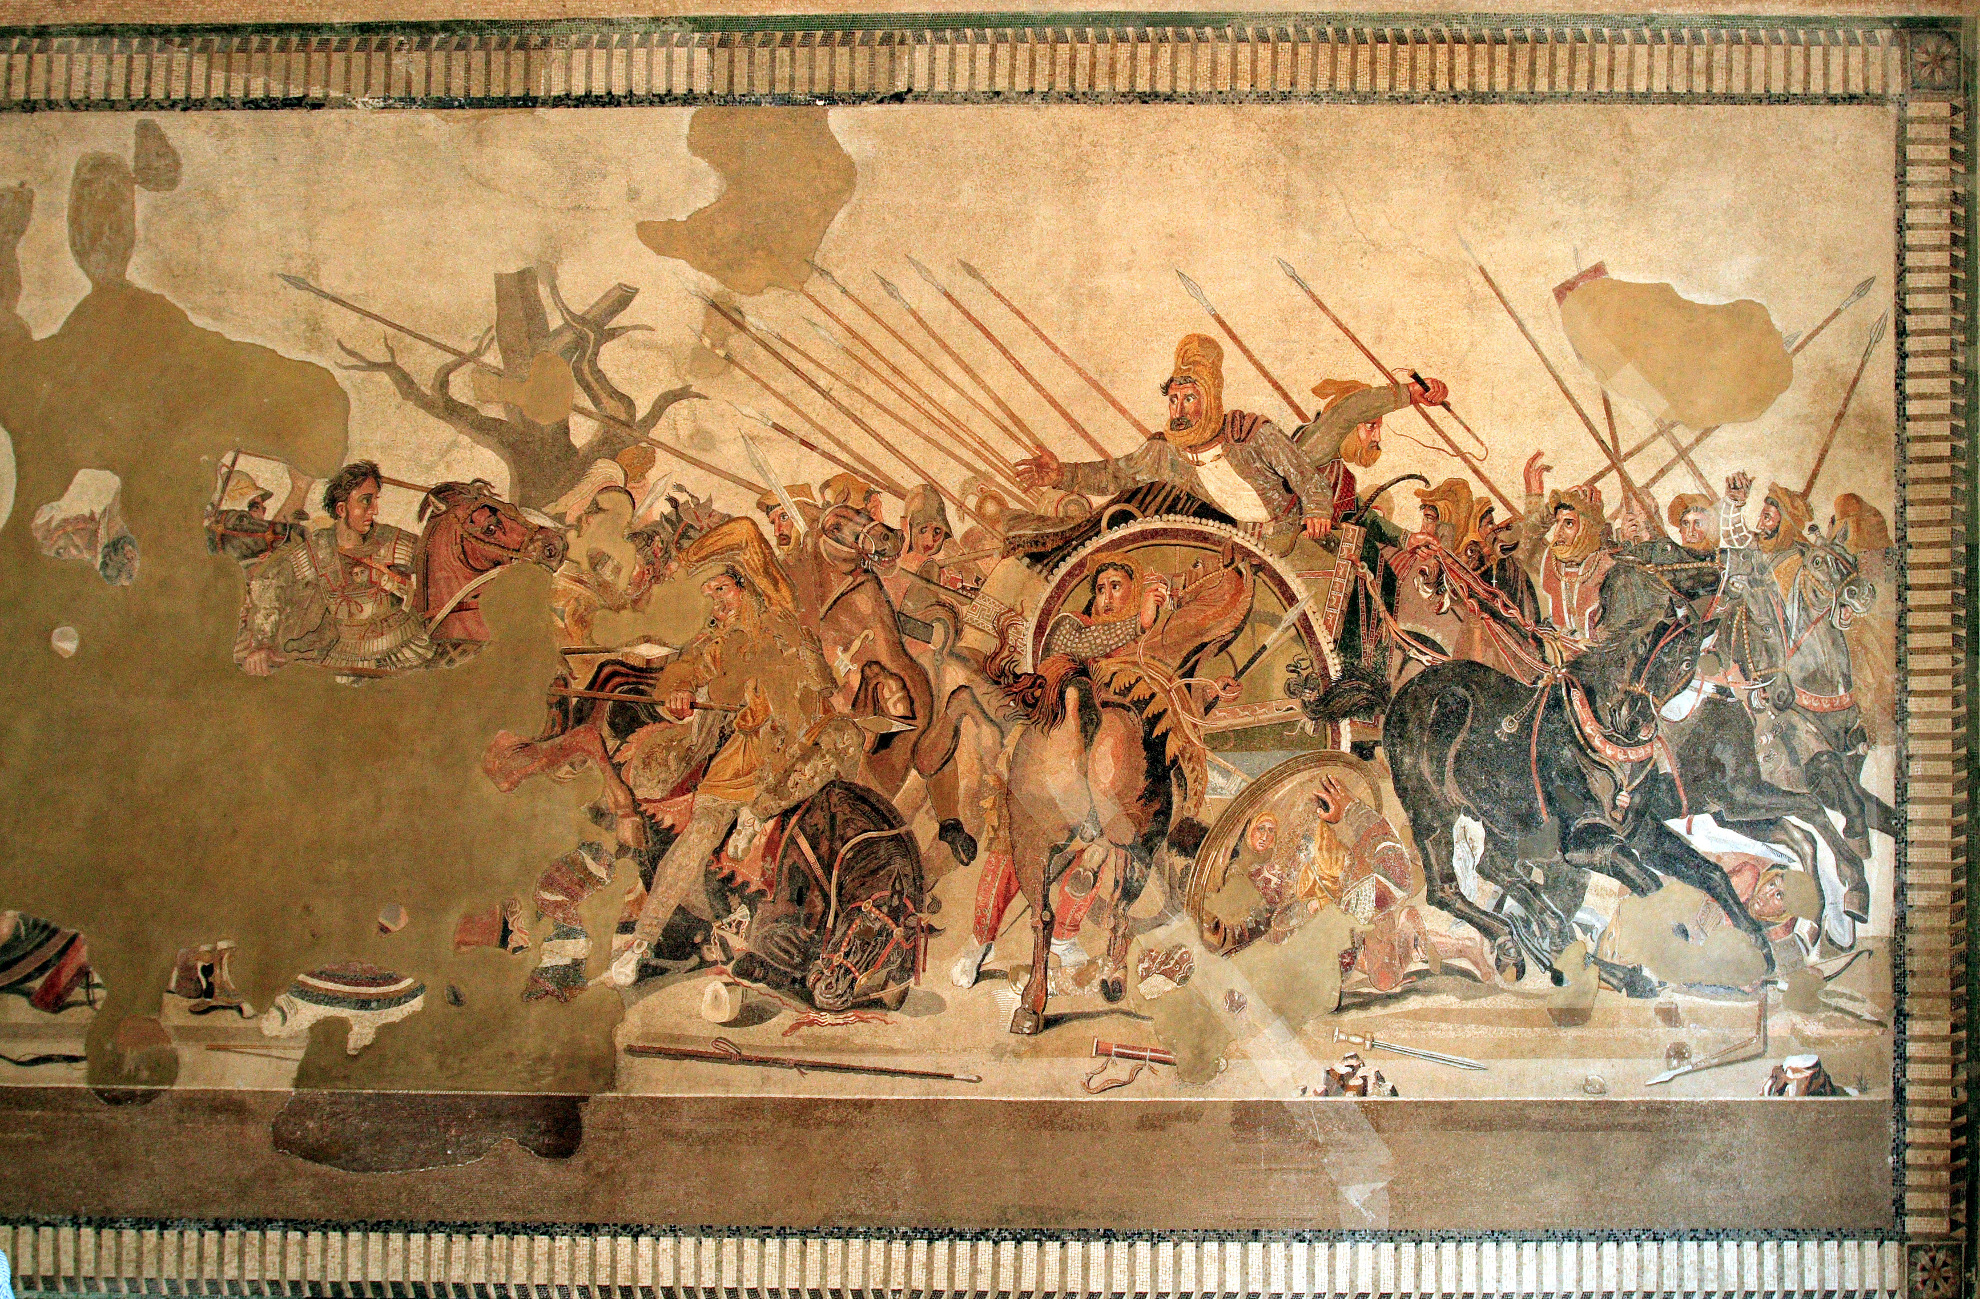 Kopie des 2. Jhs. v. Chr. nach einem Gemälde des späten 4./frühen 3. Jhs. v. Chr., Mosaik/Stein, Maße 5,13 m x 2,72 m, Neapel, Museo Archeologico Nazionale.<br>
Quelle: <a href="https://commons.wikimedia.org/wiki/File:Alexandermosaic.jpg">User:Magrippa / Wikimedia Commons</a><br>Lizenz: <a href="https://creativecommons.org/licenses/by-sa/3.0/deed.en">Creative Commons BY-SA 3.0</a>